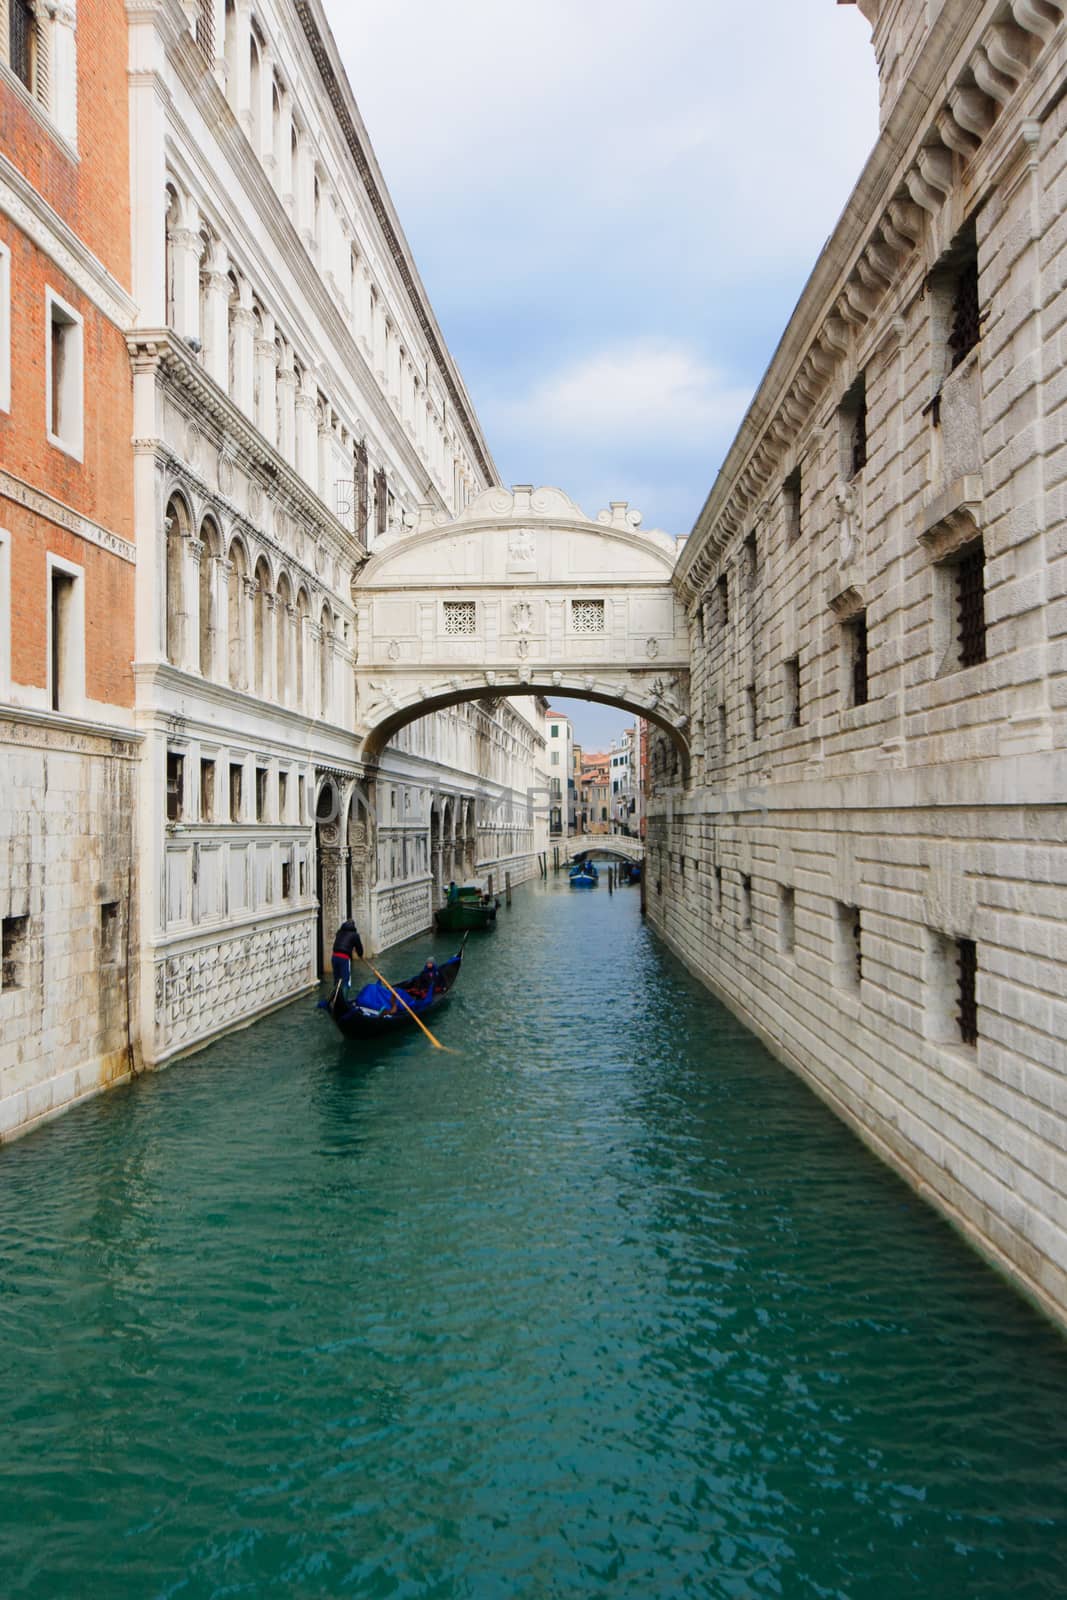 The Bridge of Sighs, Venice by RnDmS